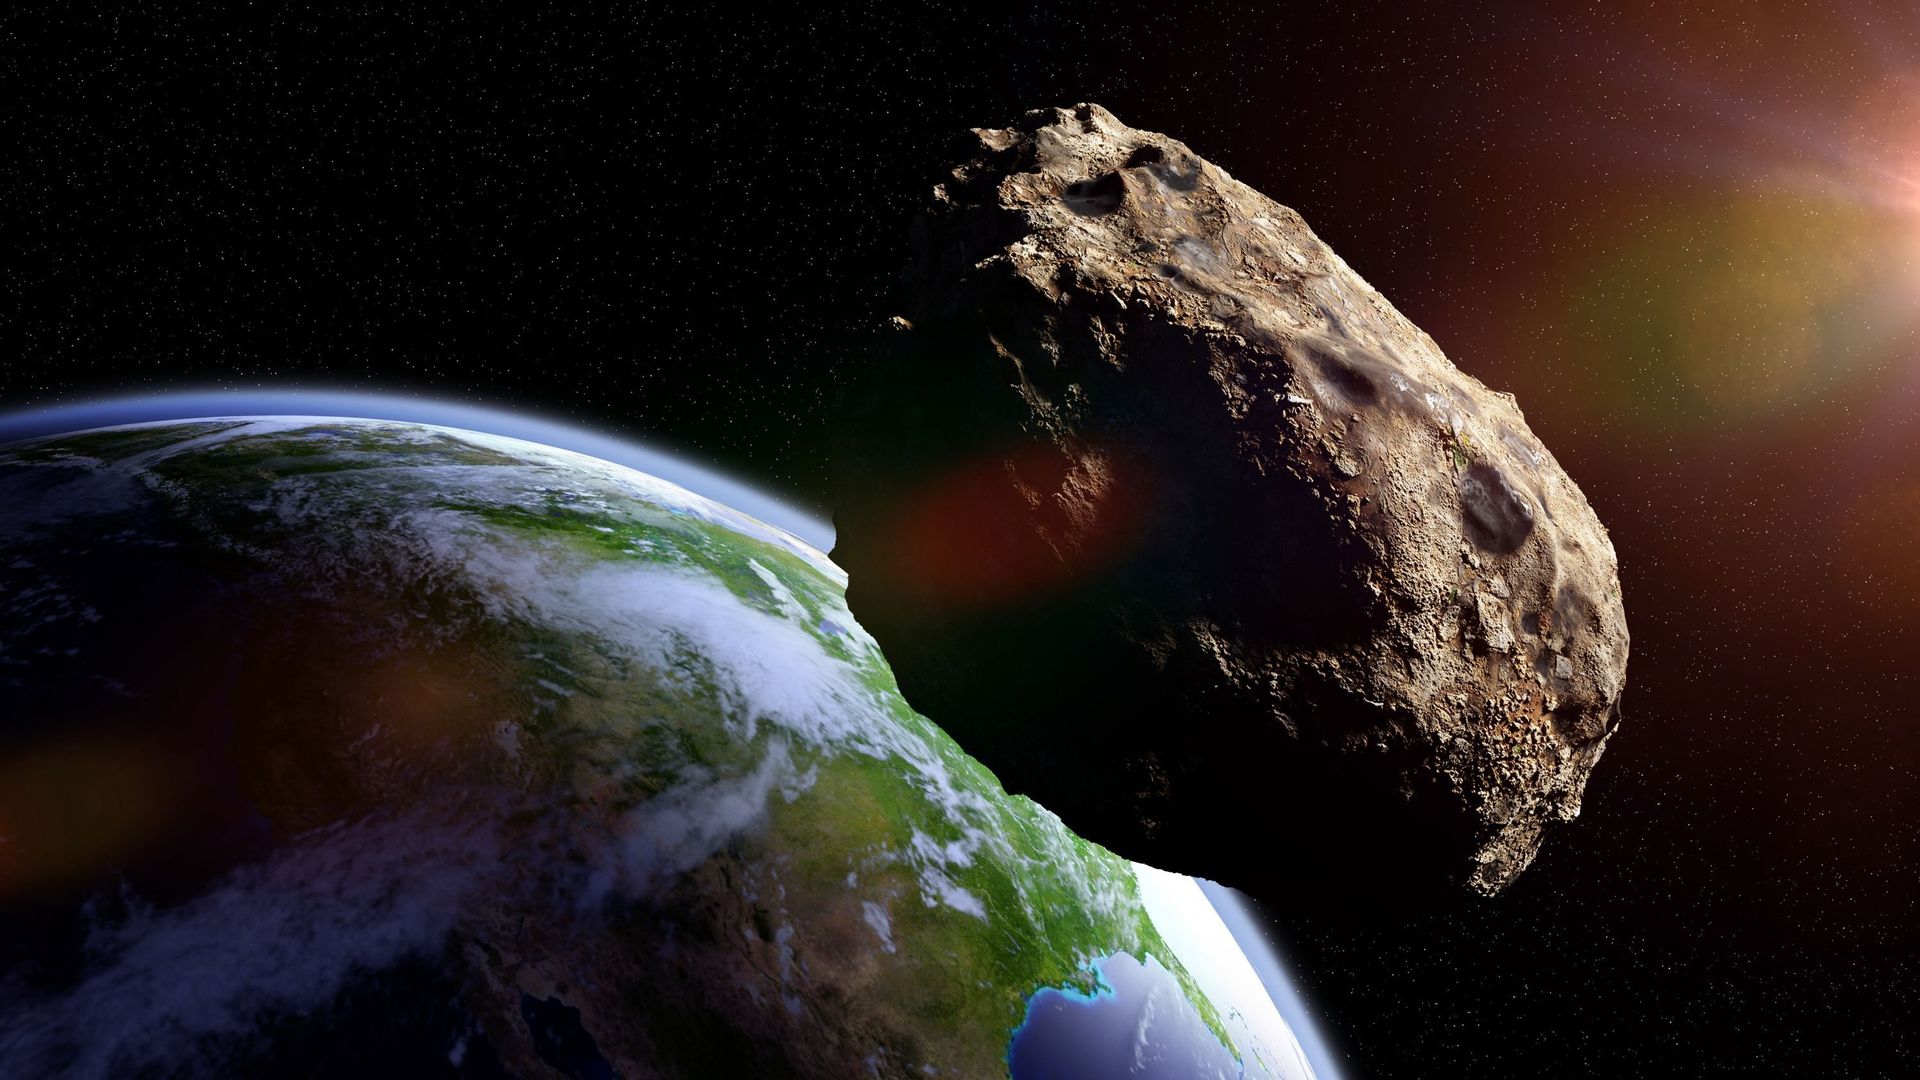 asteroid approaching planet Earth, meteorite in orbit before impact